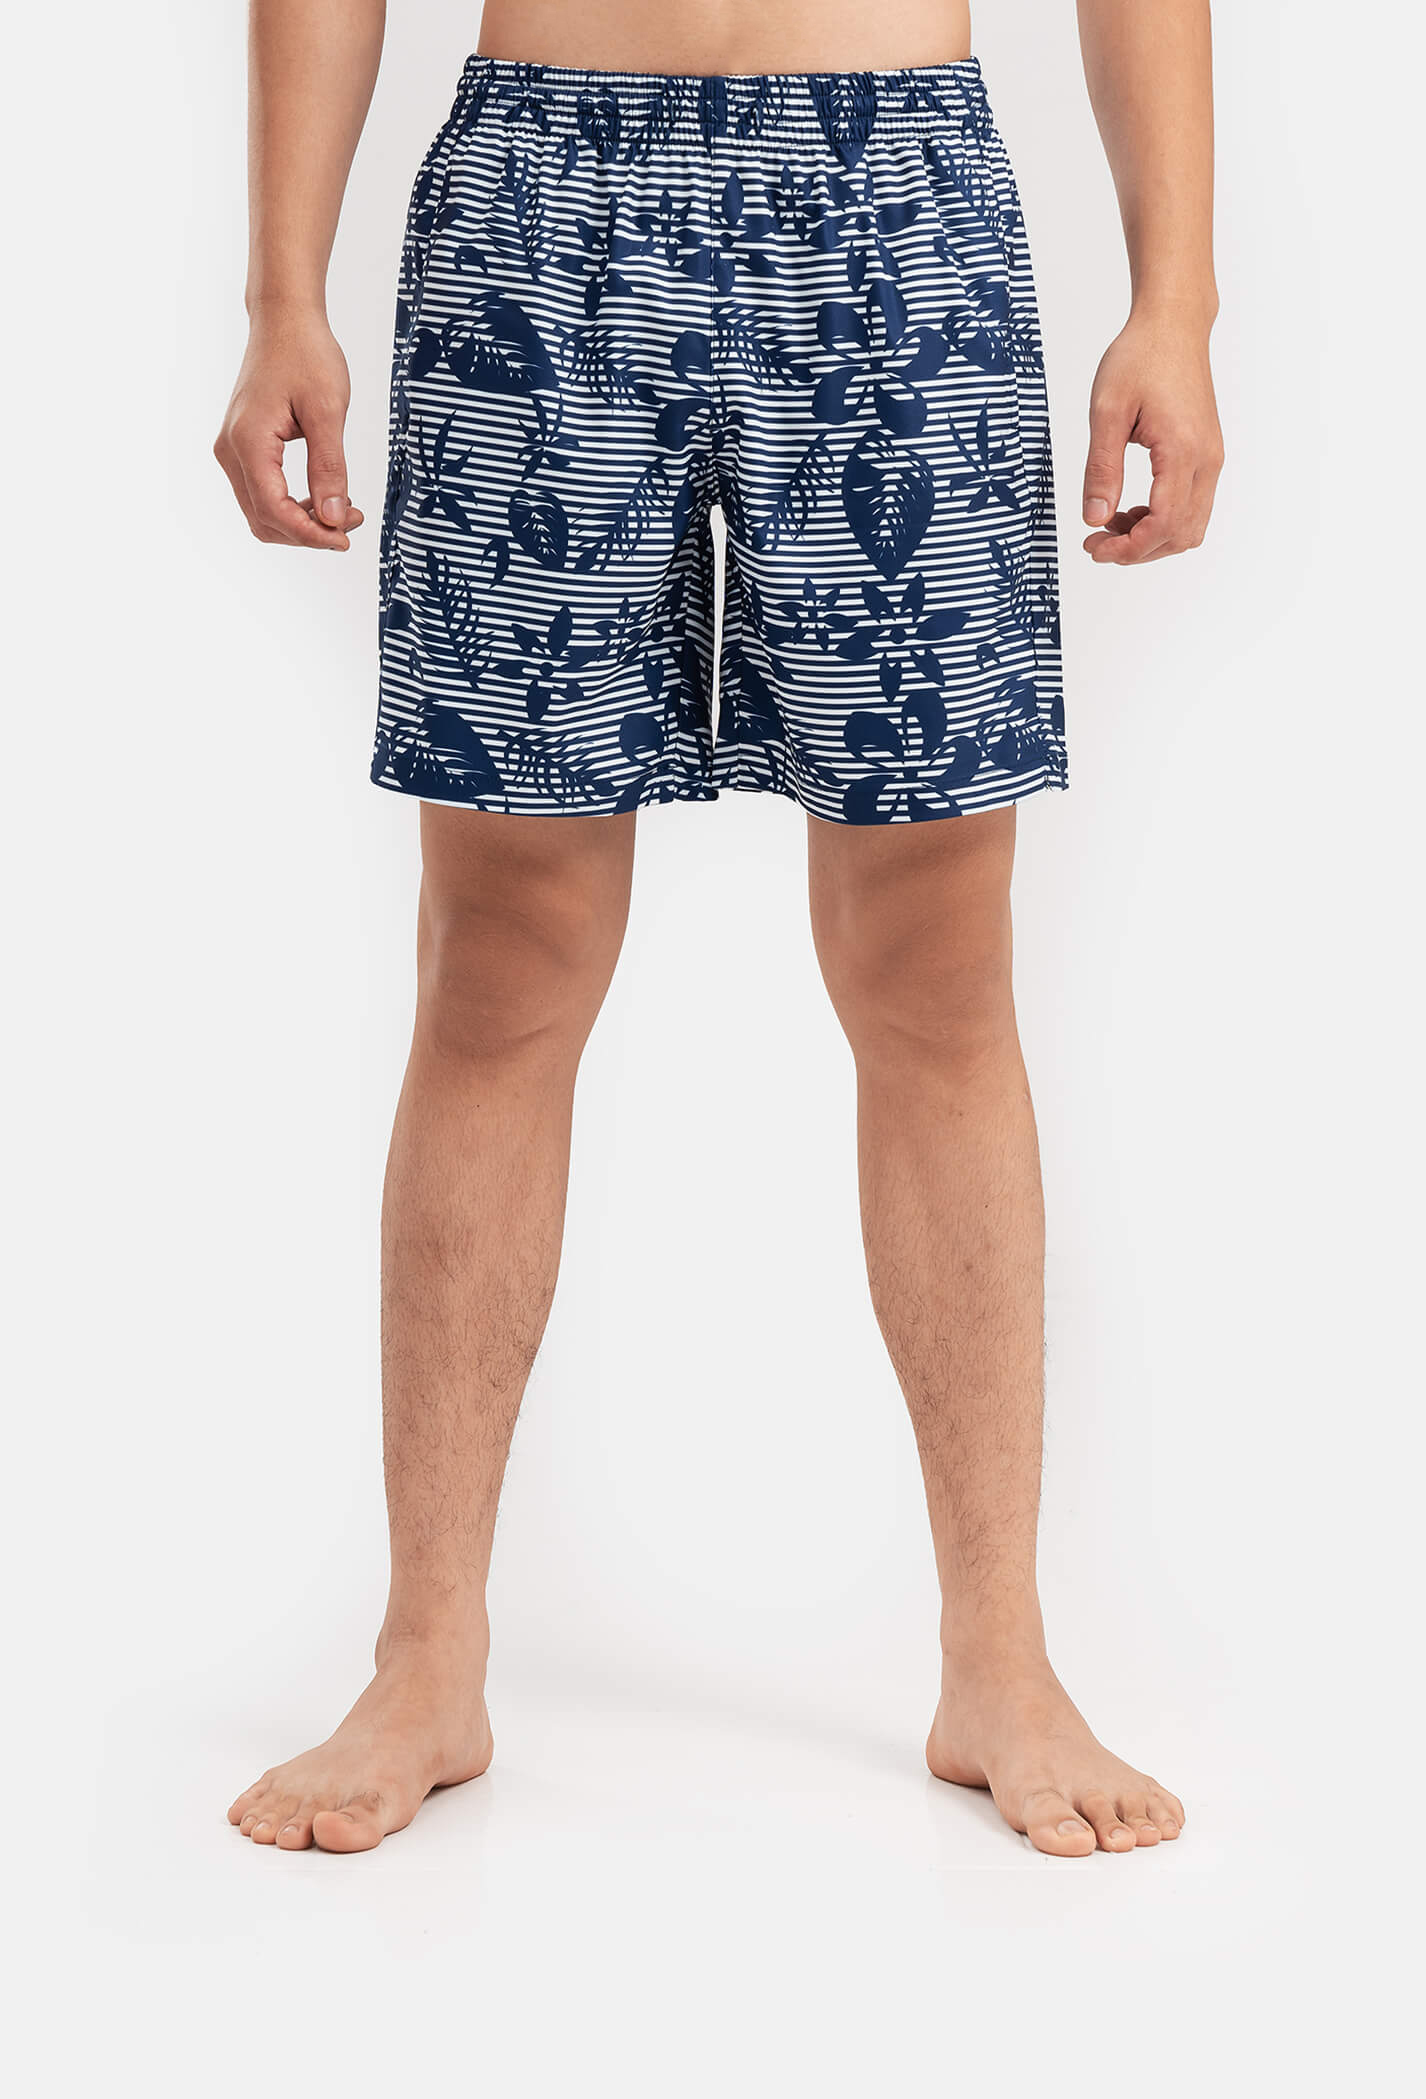 Deal - Quần shorts nam Classic Beach có túi khoá sau Xanh đậm 3